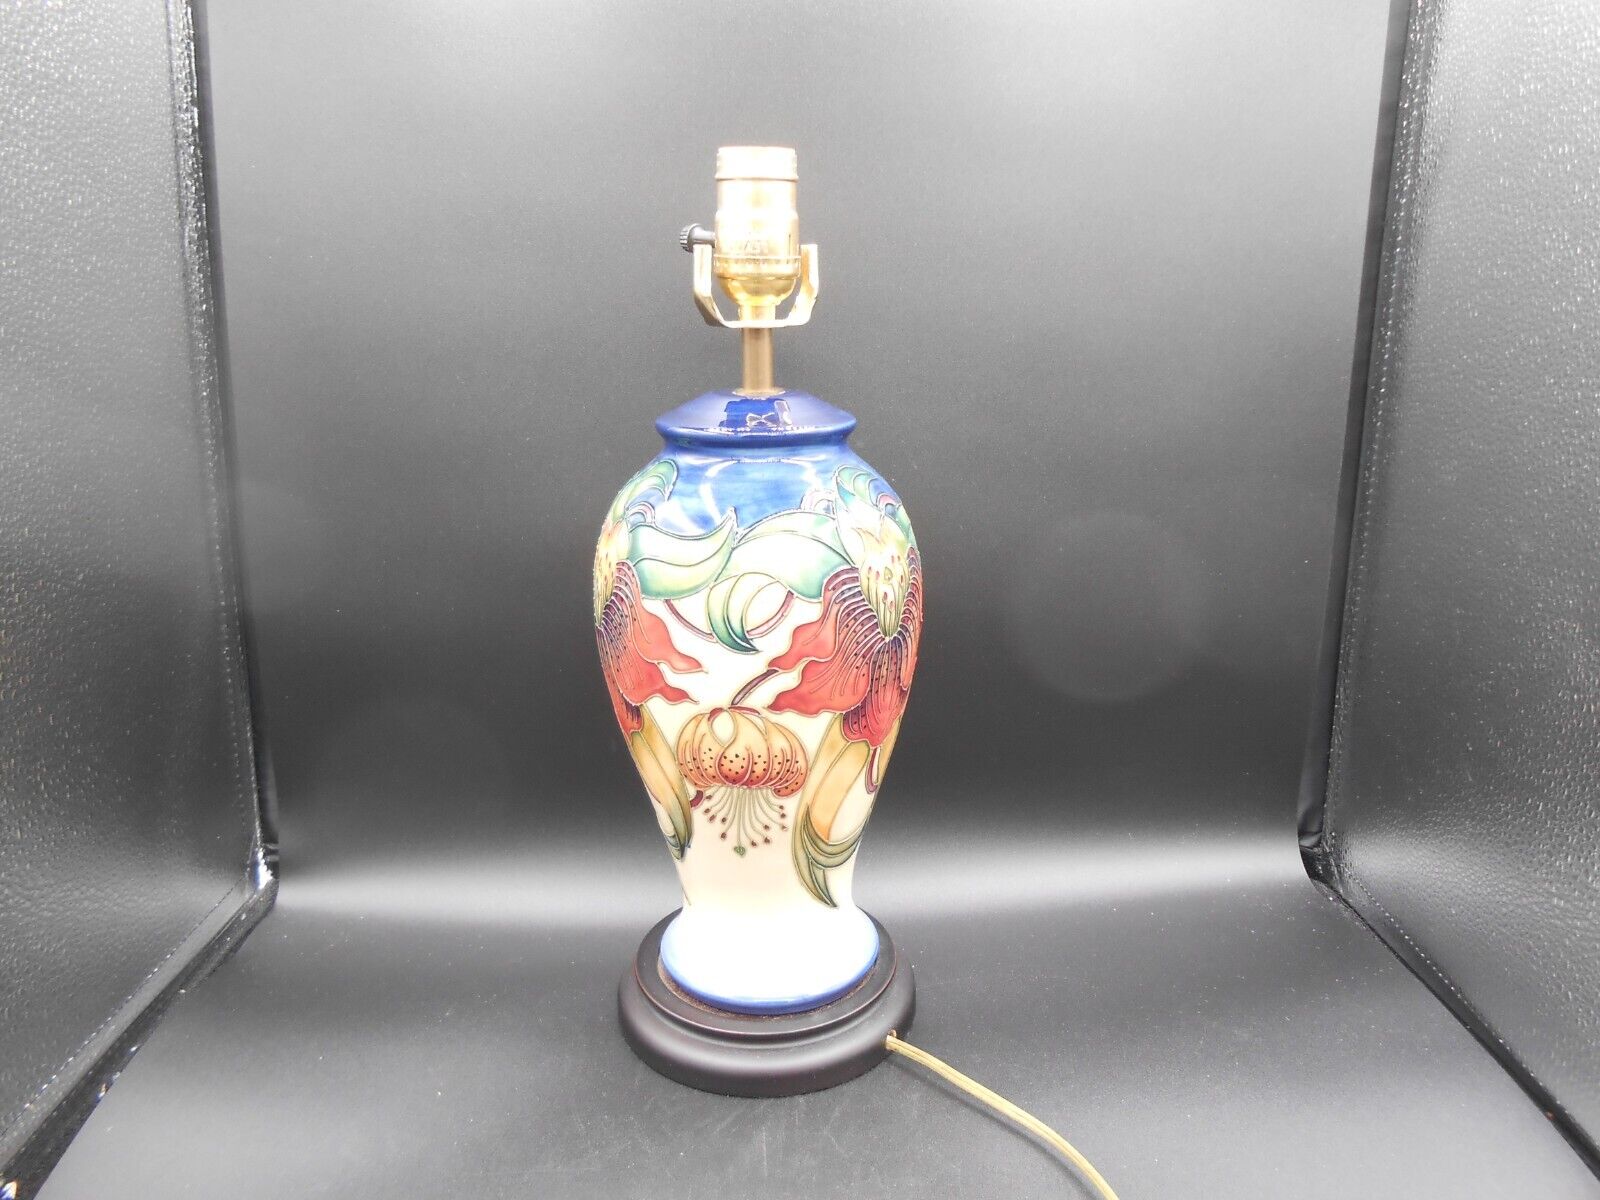 Moorcroft Pottery Lamp